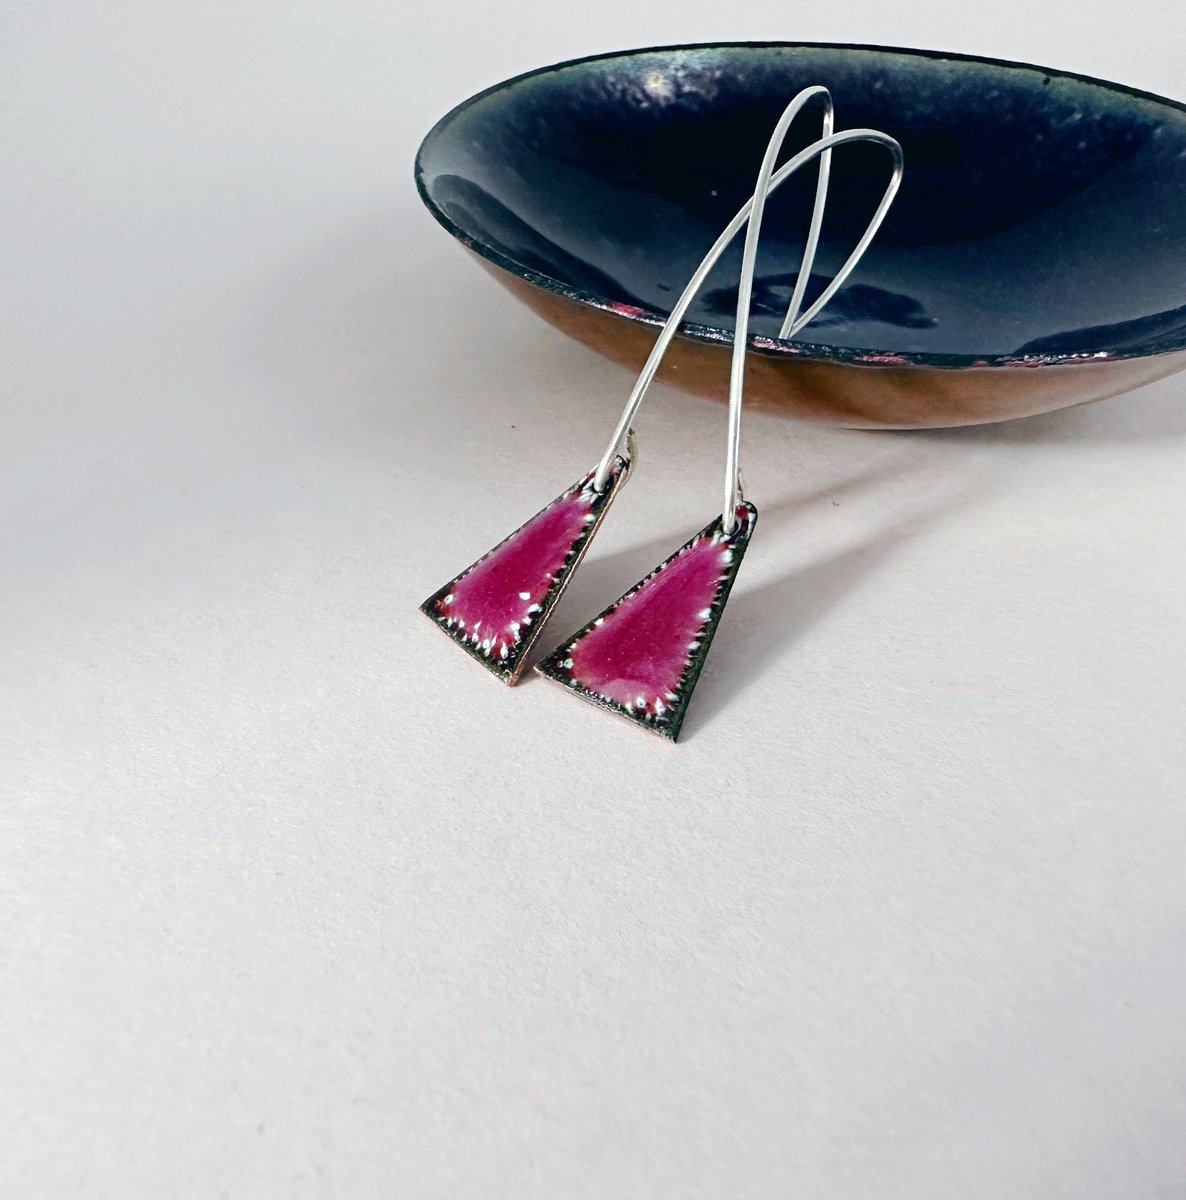 Raspberry Pink Enamel Triangle Shaped Earrings, Geometric Drop Earrings with Silver Ear Wires tuppu.net/bd89599 #Etsy #MyNewTag #UKCraftersHour #ShopIndie #MHHSBD #MaisyPlum #TriangleEarrings